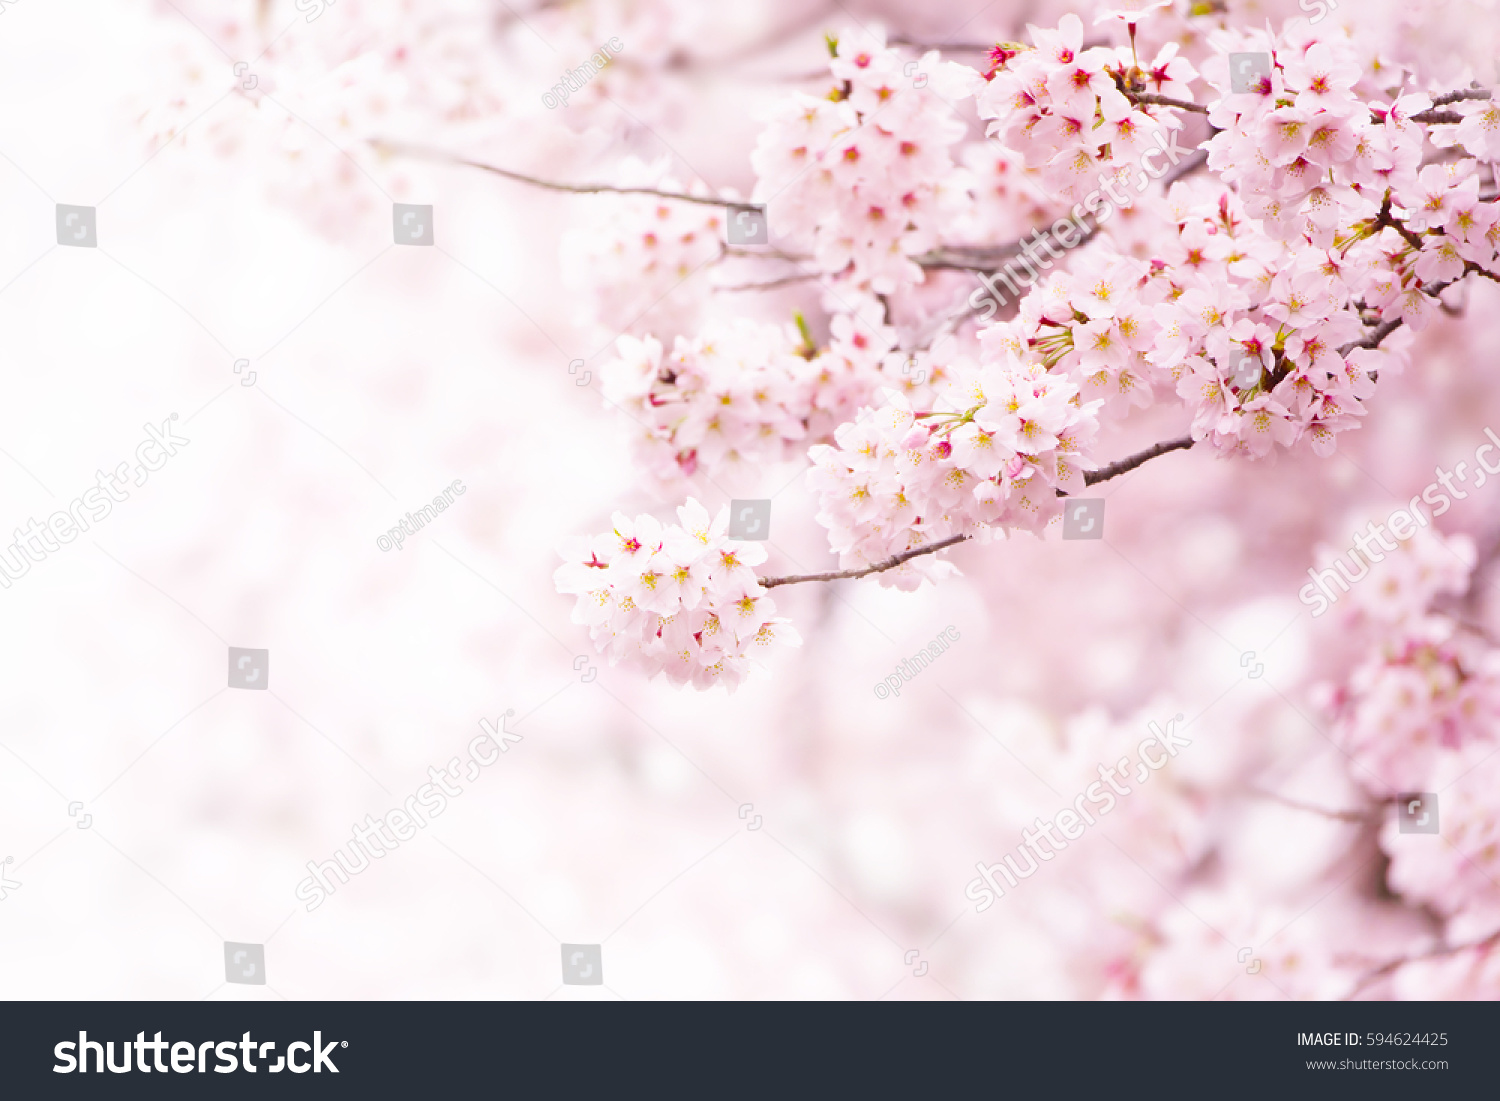 powerpoint-template-sakura-pink-cherry-blossom-mulnjlljm